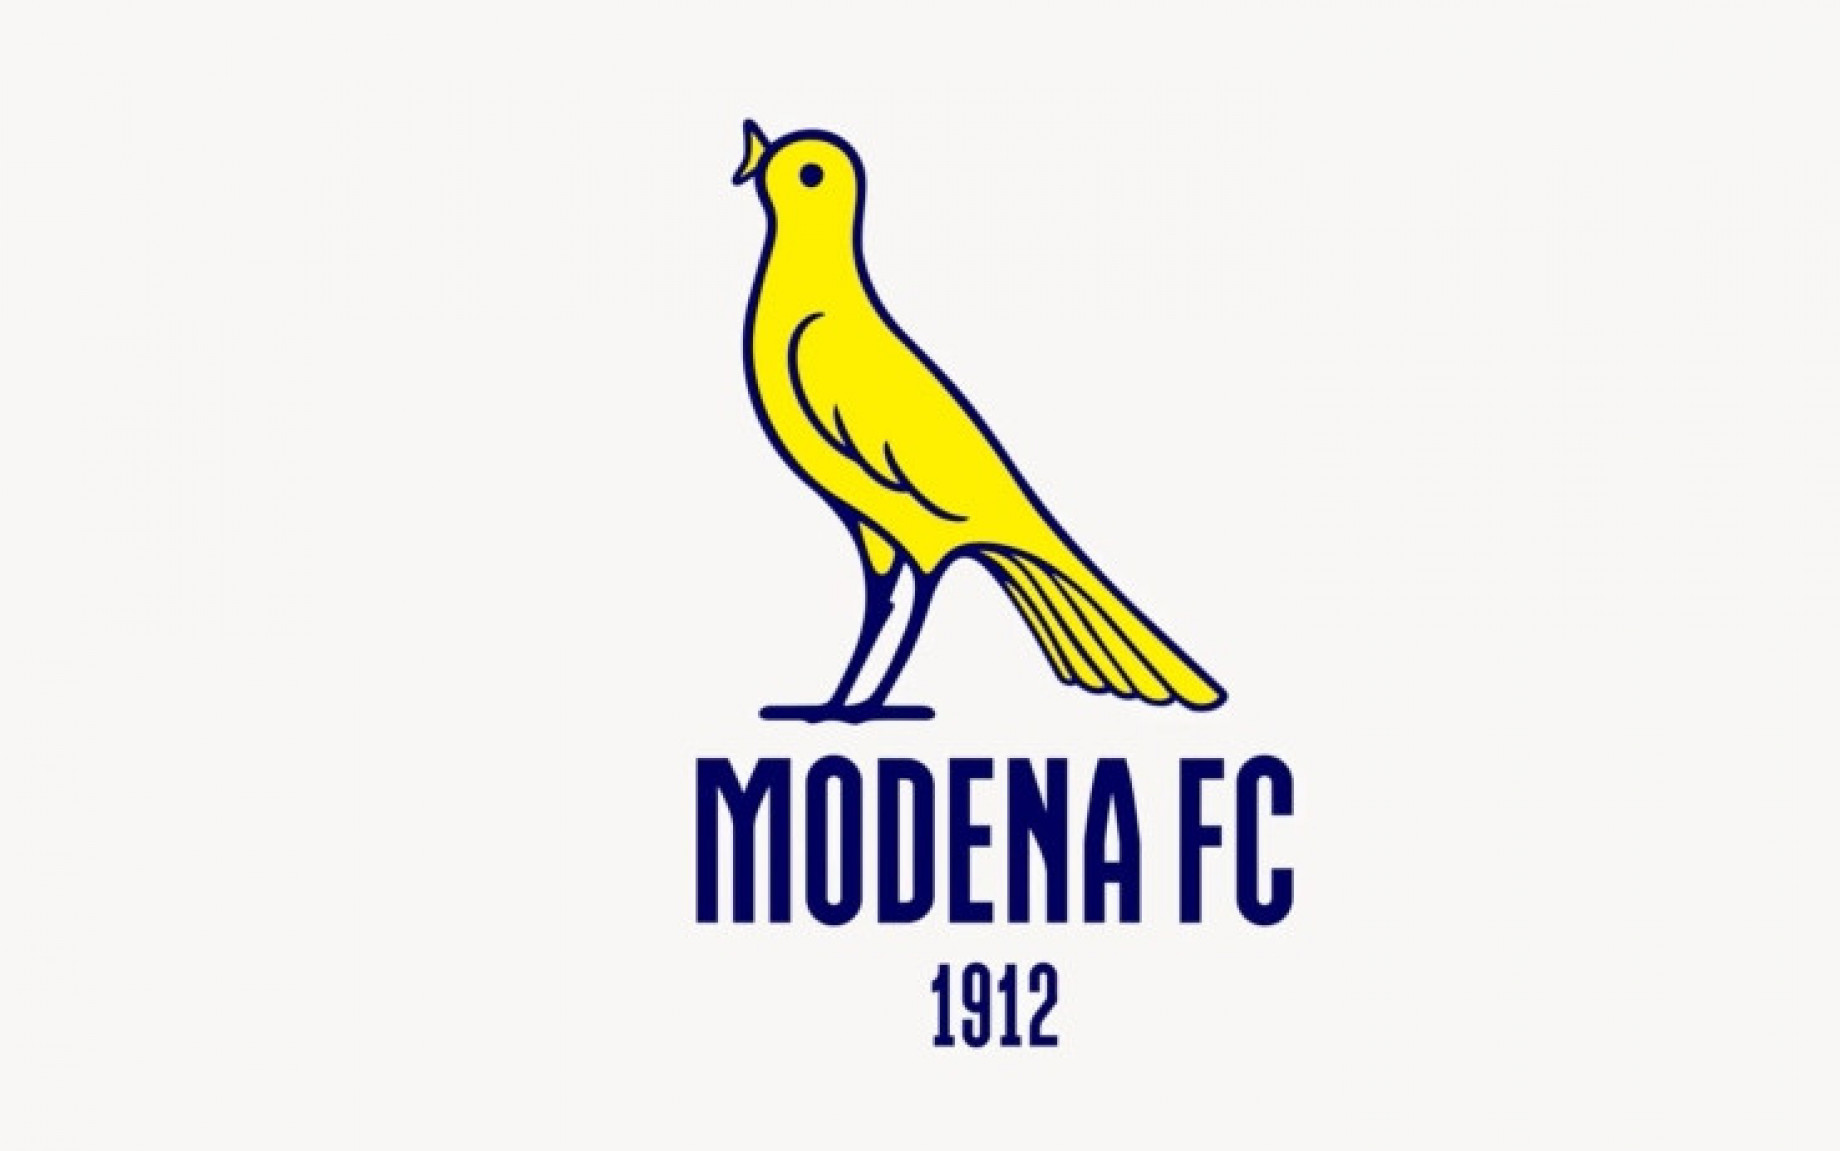 modena_logo-1.jpg